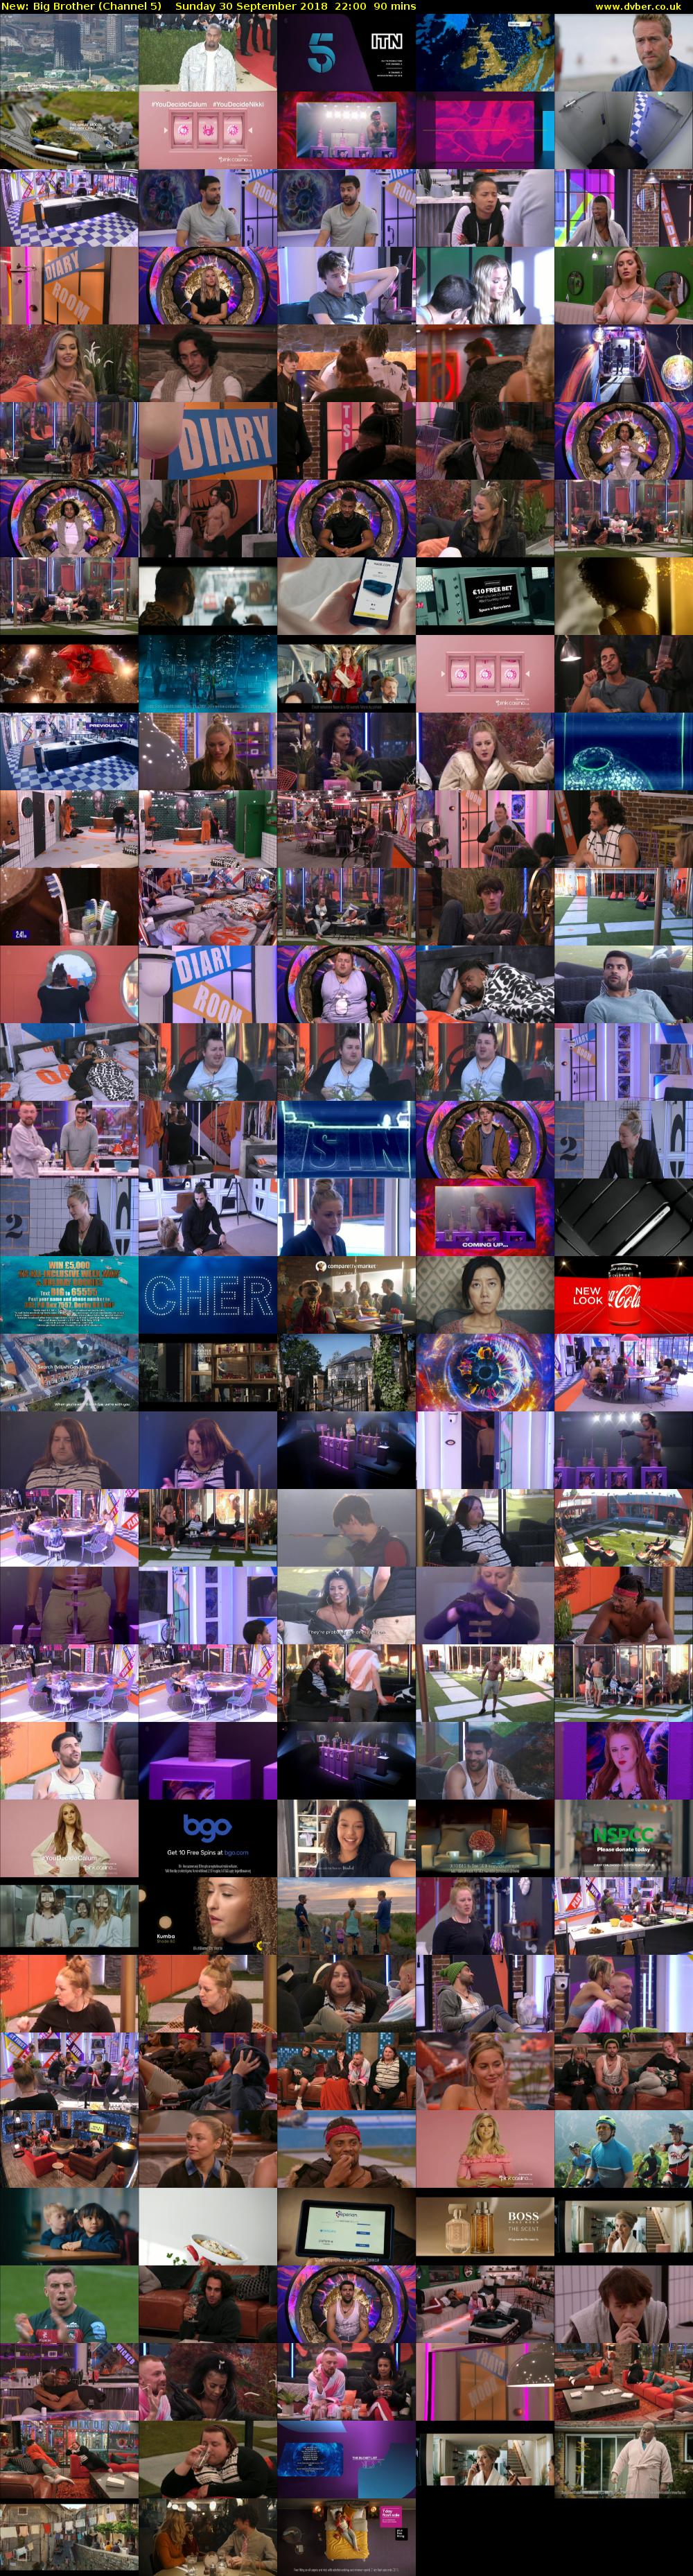 Big Brother (Channel 5) Sunday 30 September 2018 22:00 - 23:30